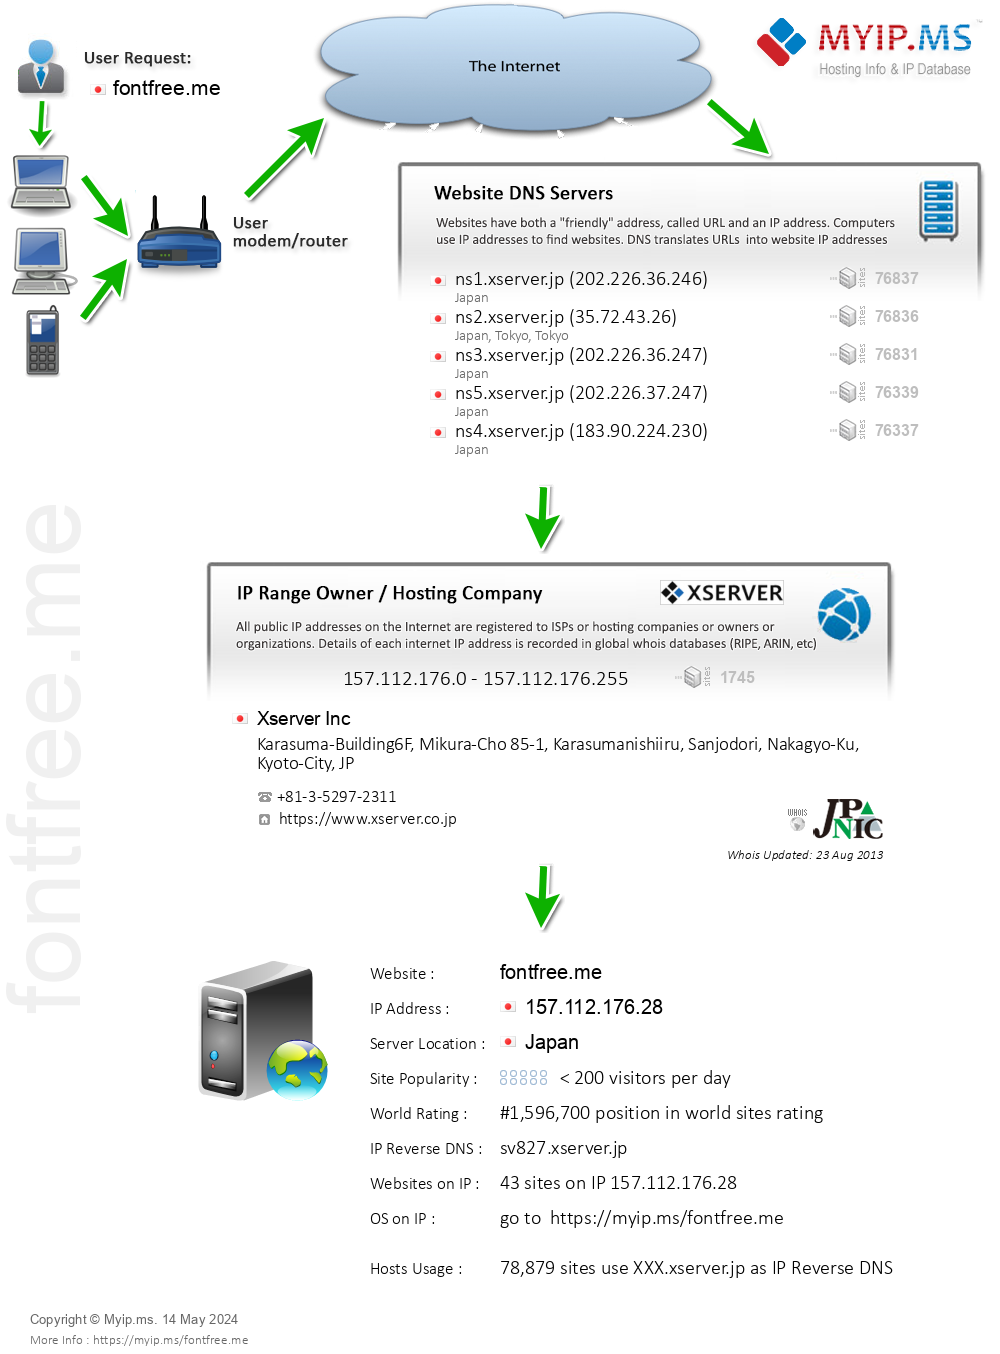 Fontfree.me - Website Hosting Visual IP Diagram